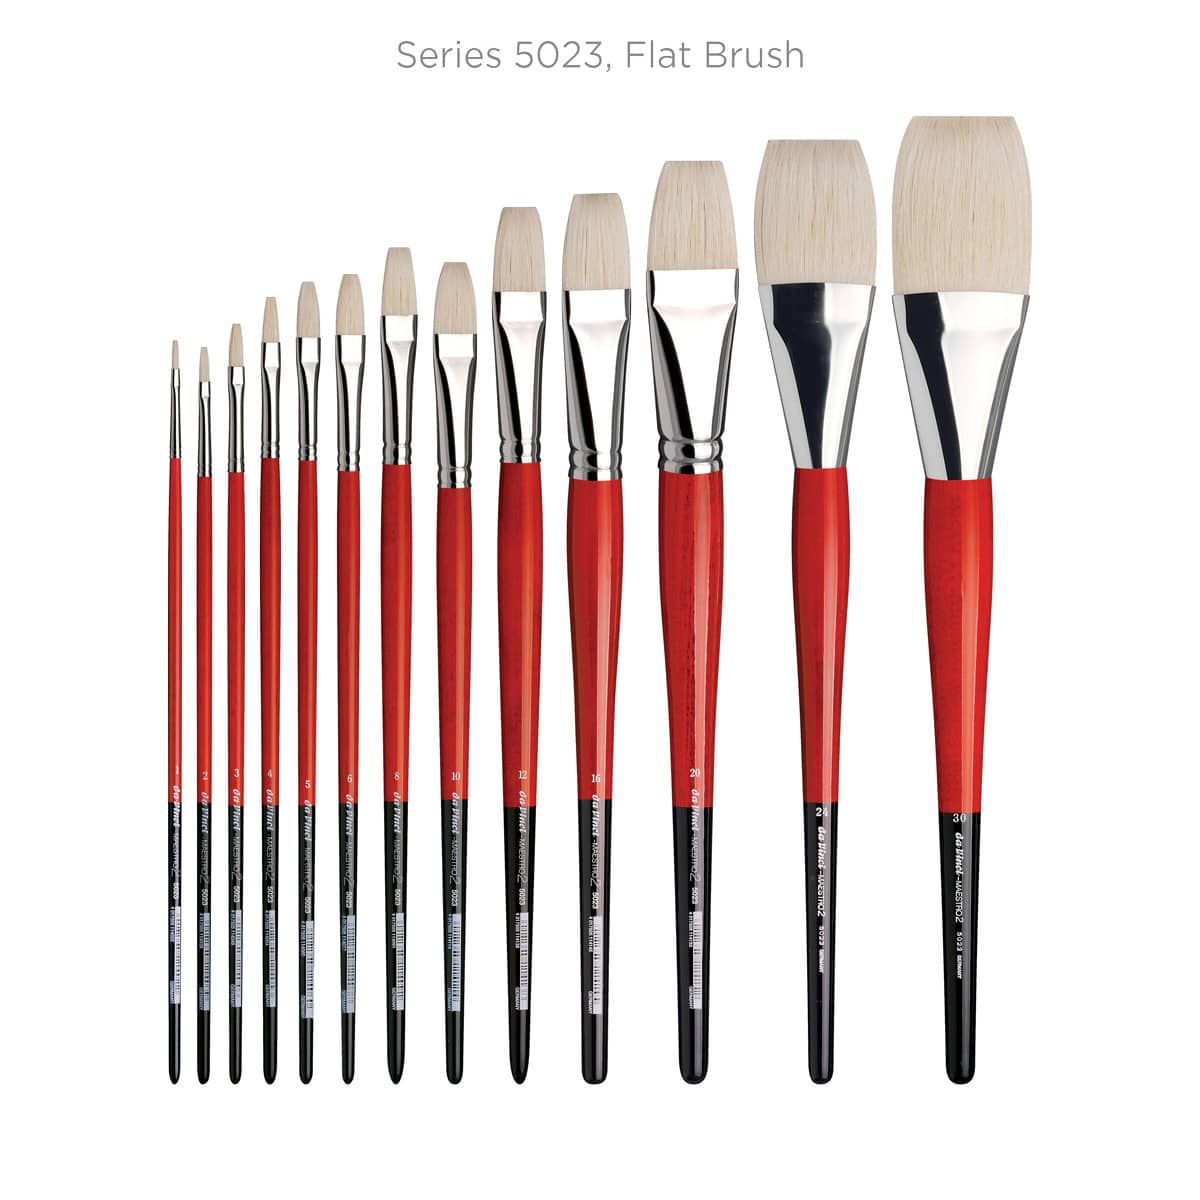 Series 5023 Flat Brushes